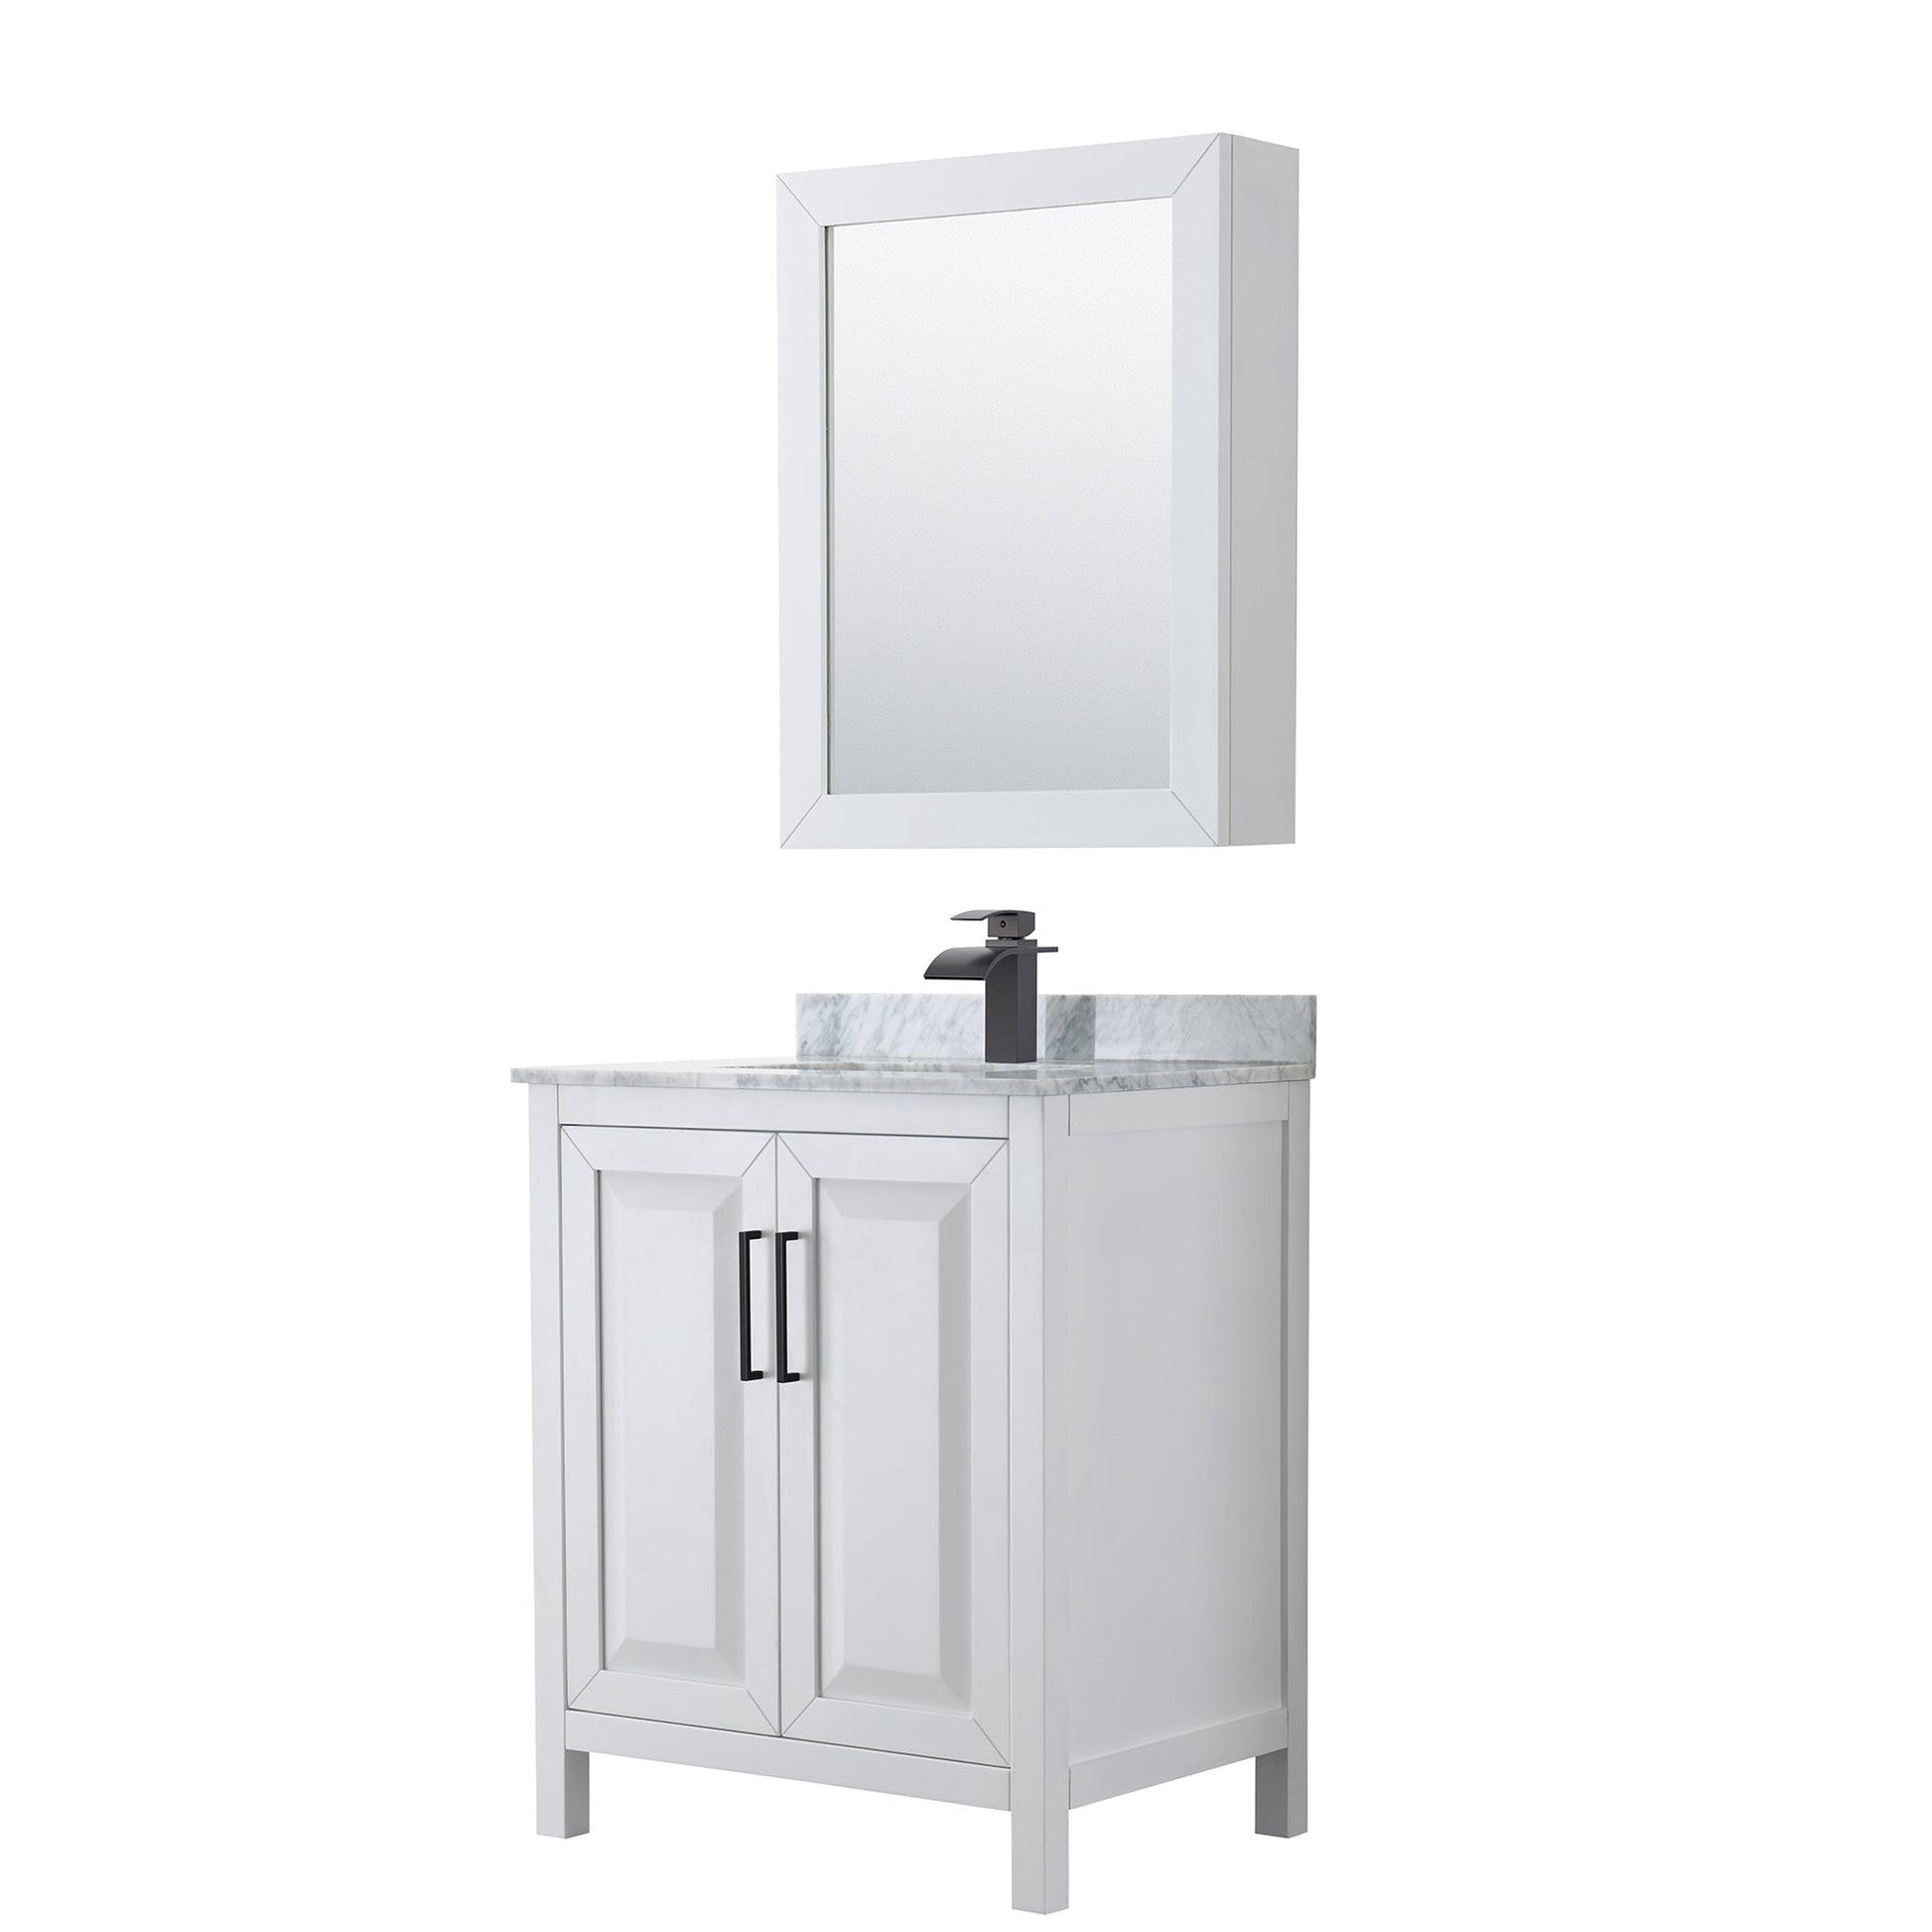 Daria 30" Single Bathroom Vanity in White, White Carrara Marble Countertop, Undermount Square Sink, Matte Black Trim, Medicine Cabinet